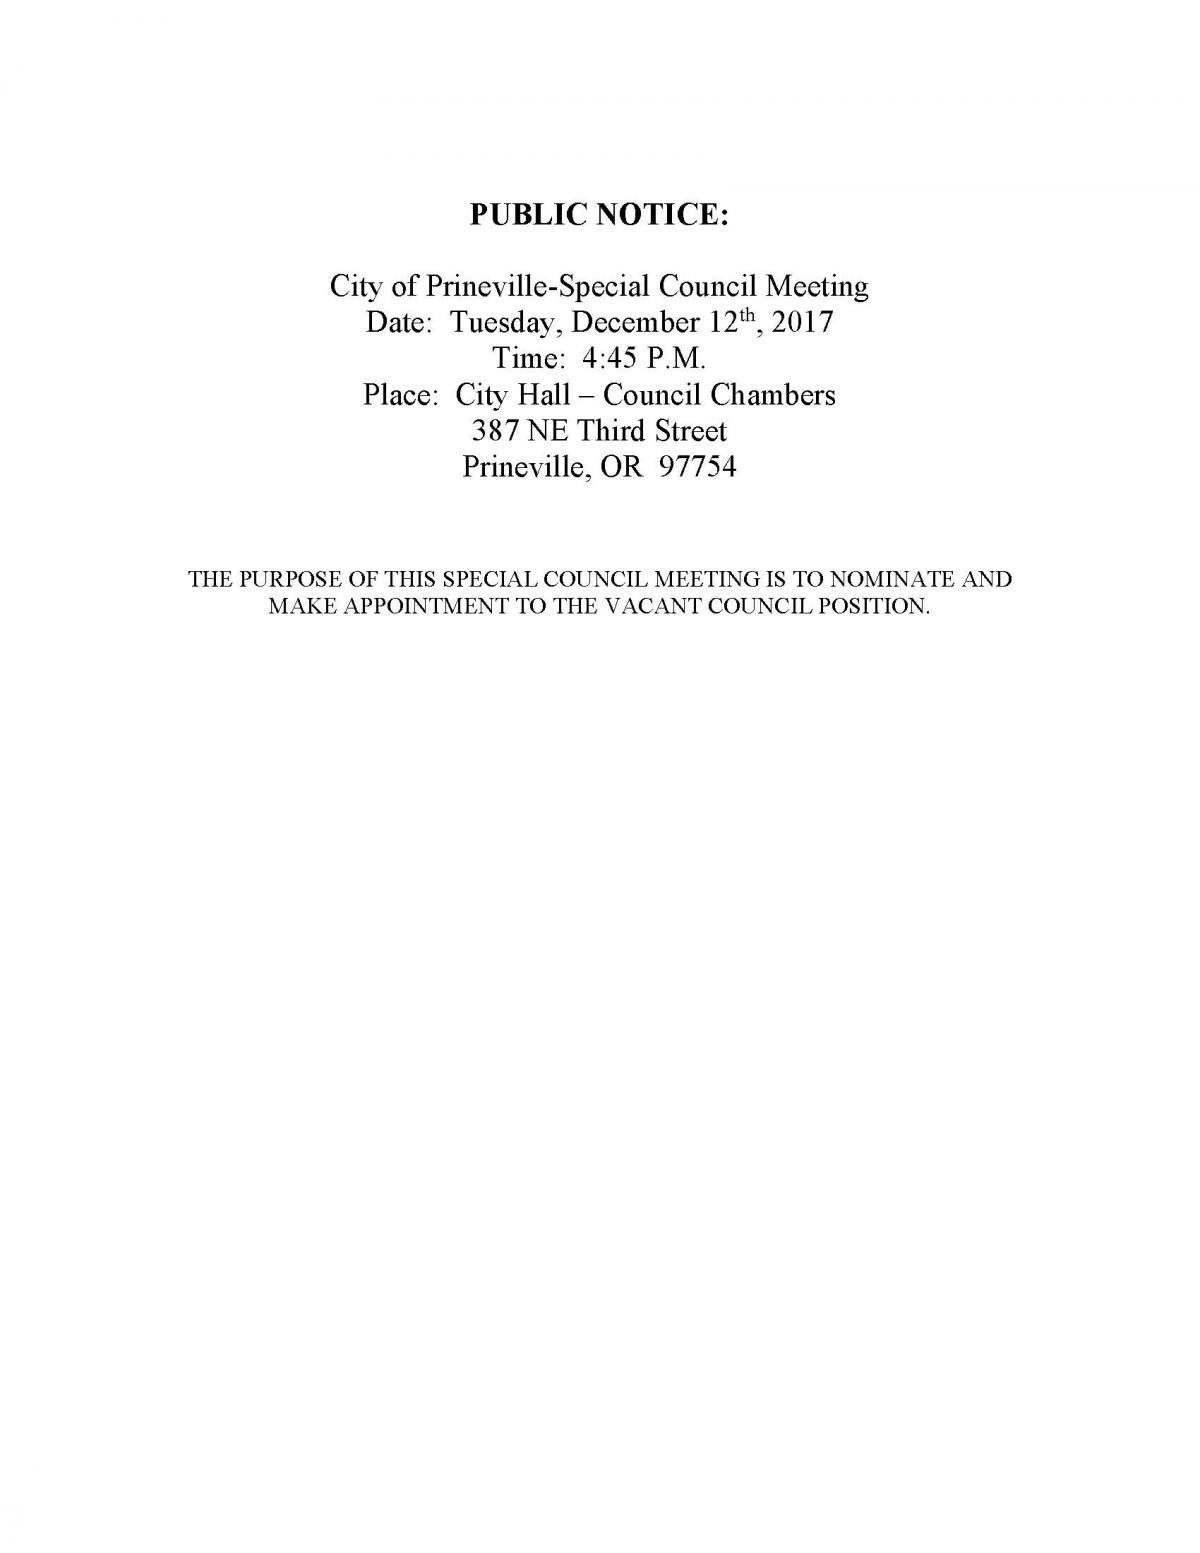 Public Notice - Special Council Meeting 12-12-17